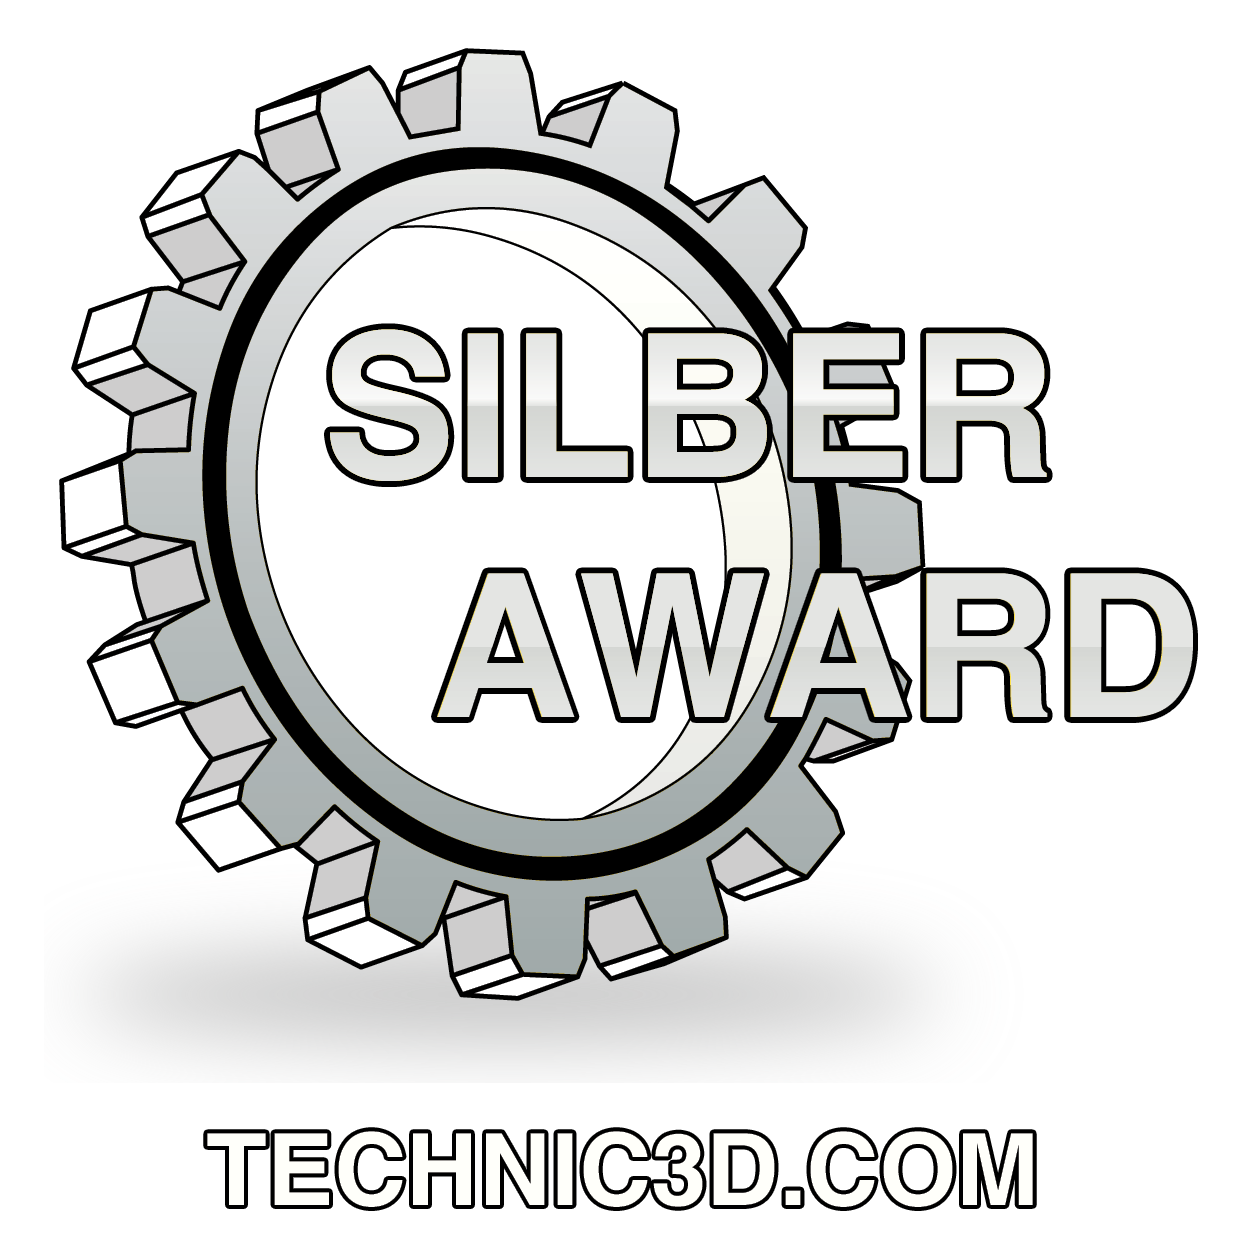 Technik3D: Silver Award